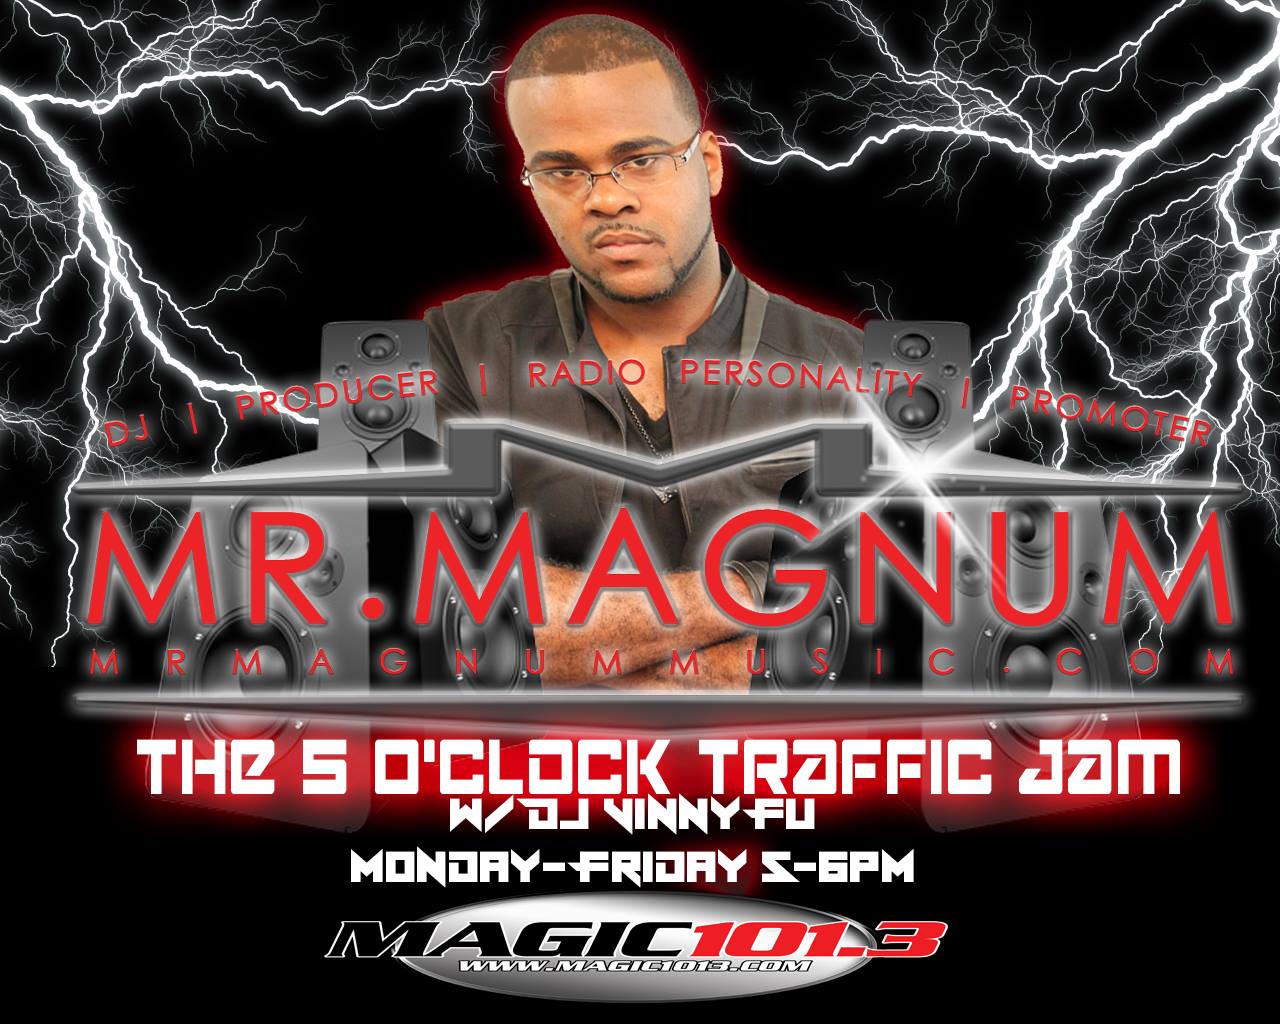 The 5 O’Clock Traffic Jam 1/6/17 on Magic 101.3